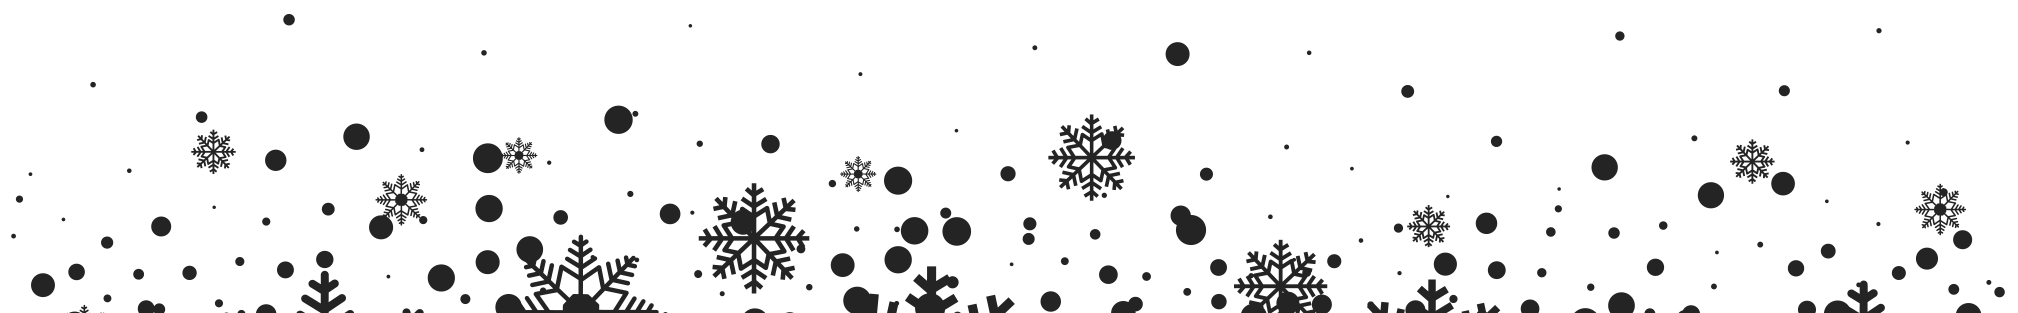 snow image